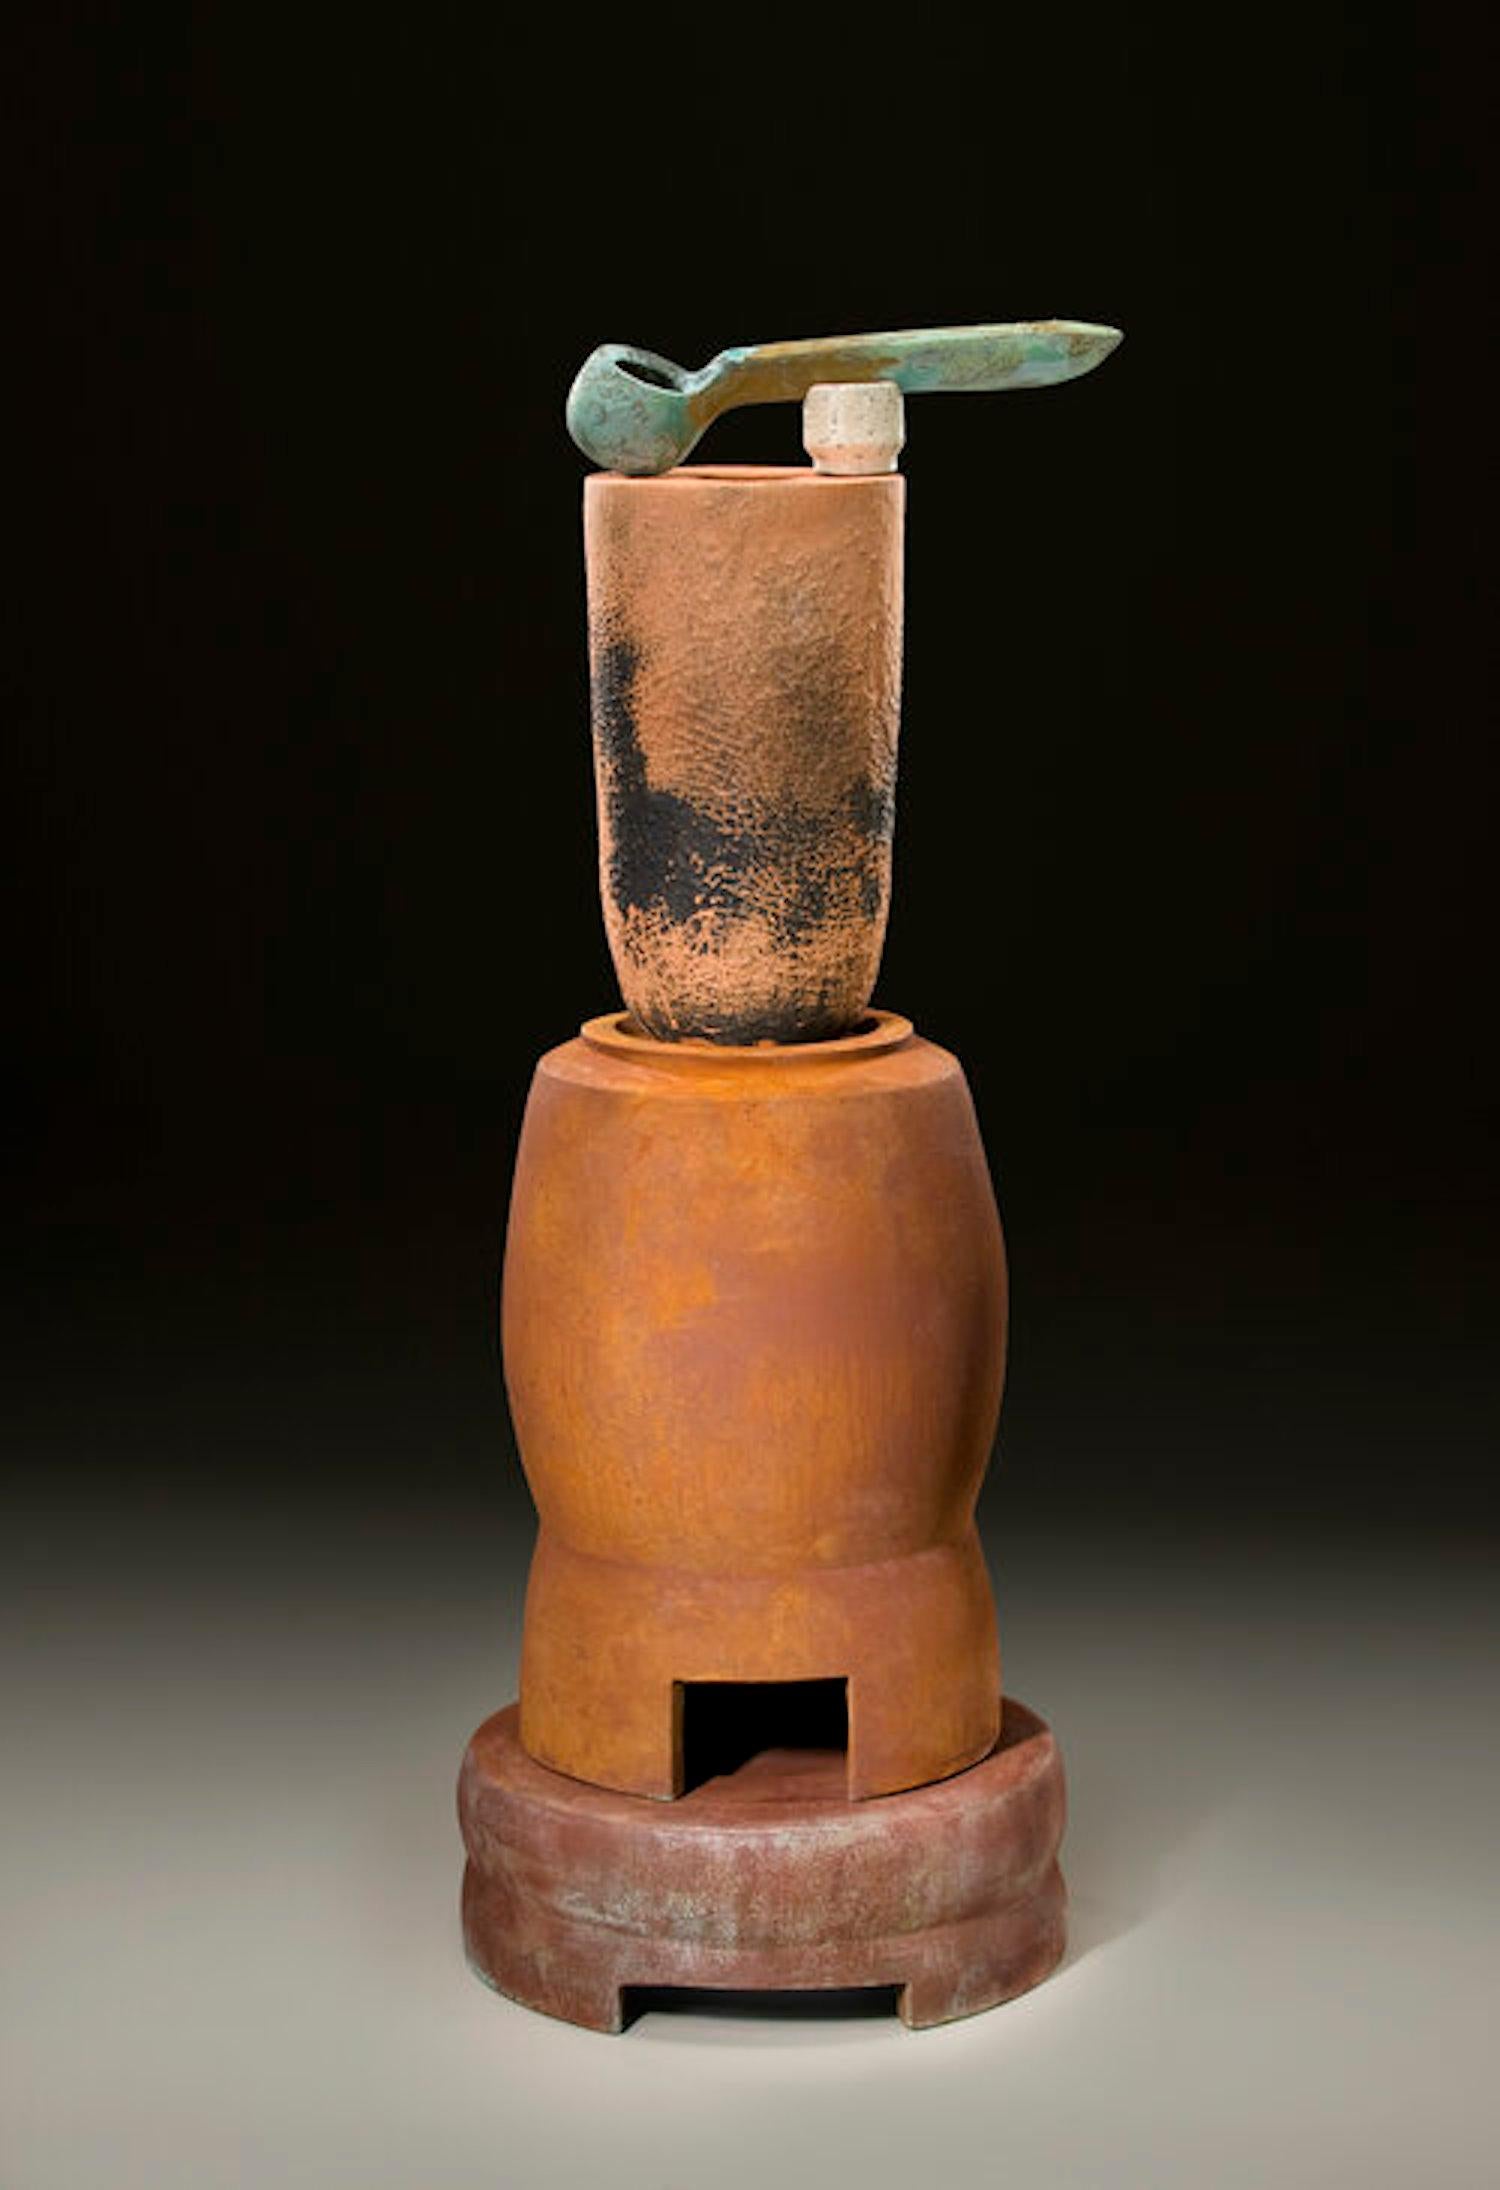 Richard Hirsch Glazed Ceramic Crucible Sculpture #1, 2011 For Sale 2